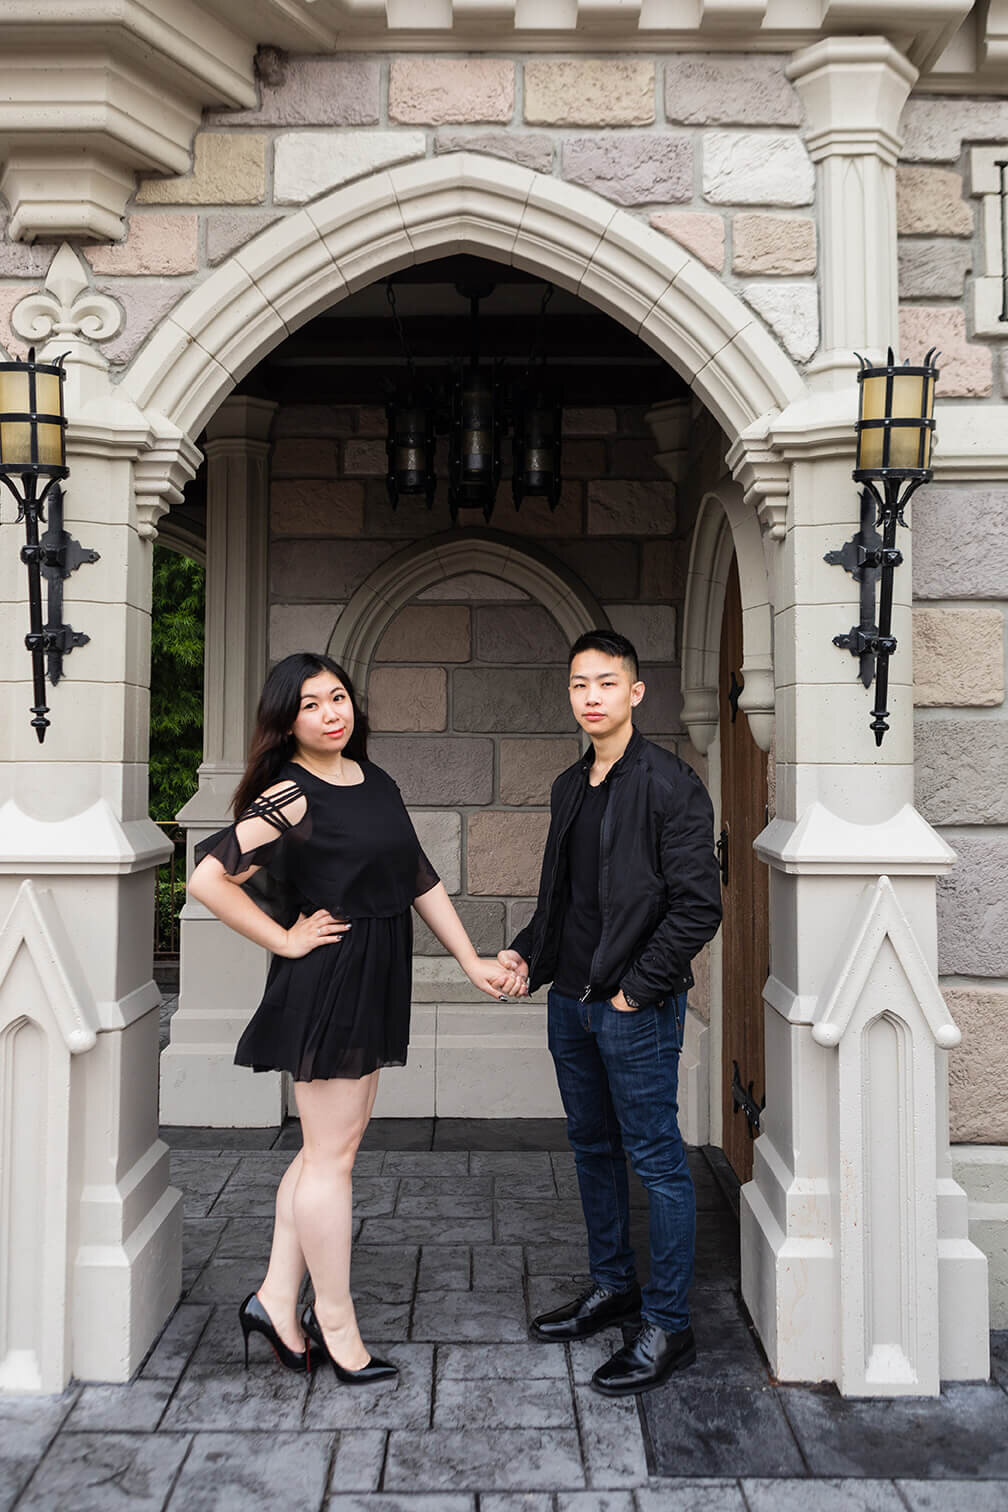  Grace and Alex's Magic Kingdom Marriage Proposal, Walt Disney World, Orlando, Florida 